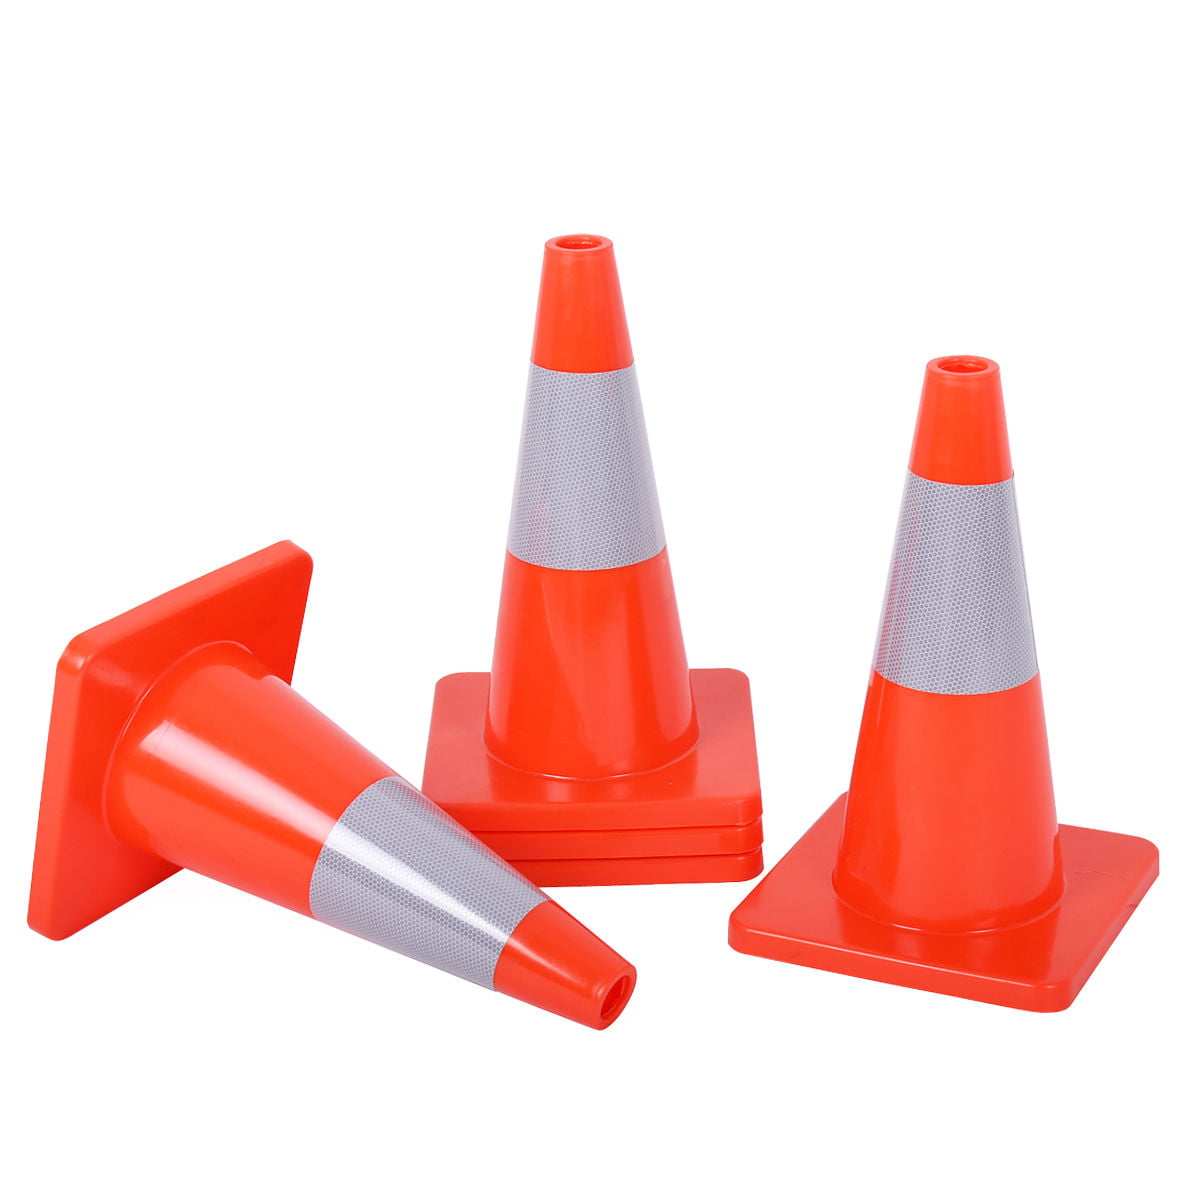 Construction Cones 2 Pack Church Parking Cones Safety Cones Street Cones 28 Yellow Cones with Church Parking Signs Parking Cones